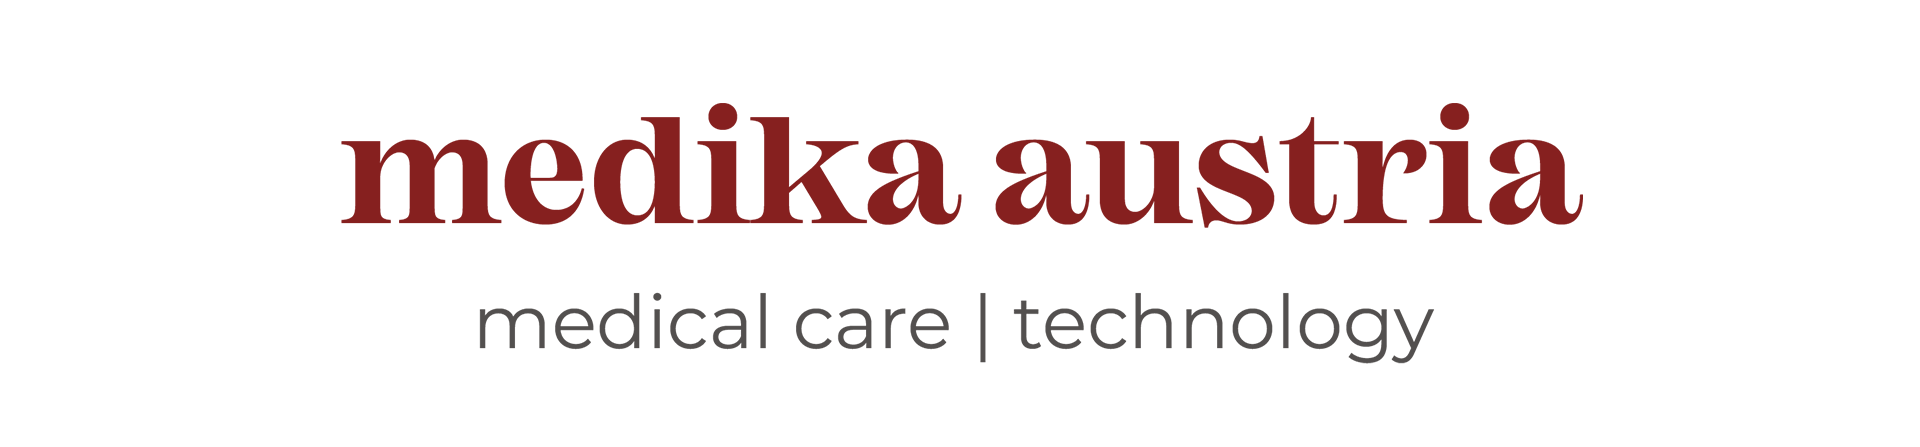 medika_logo_austria